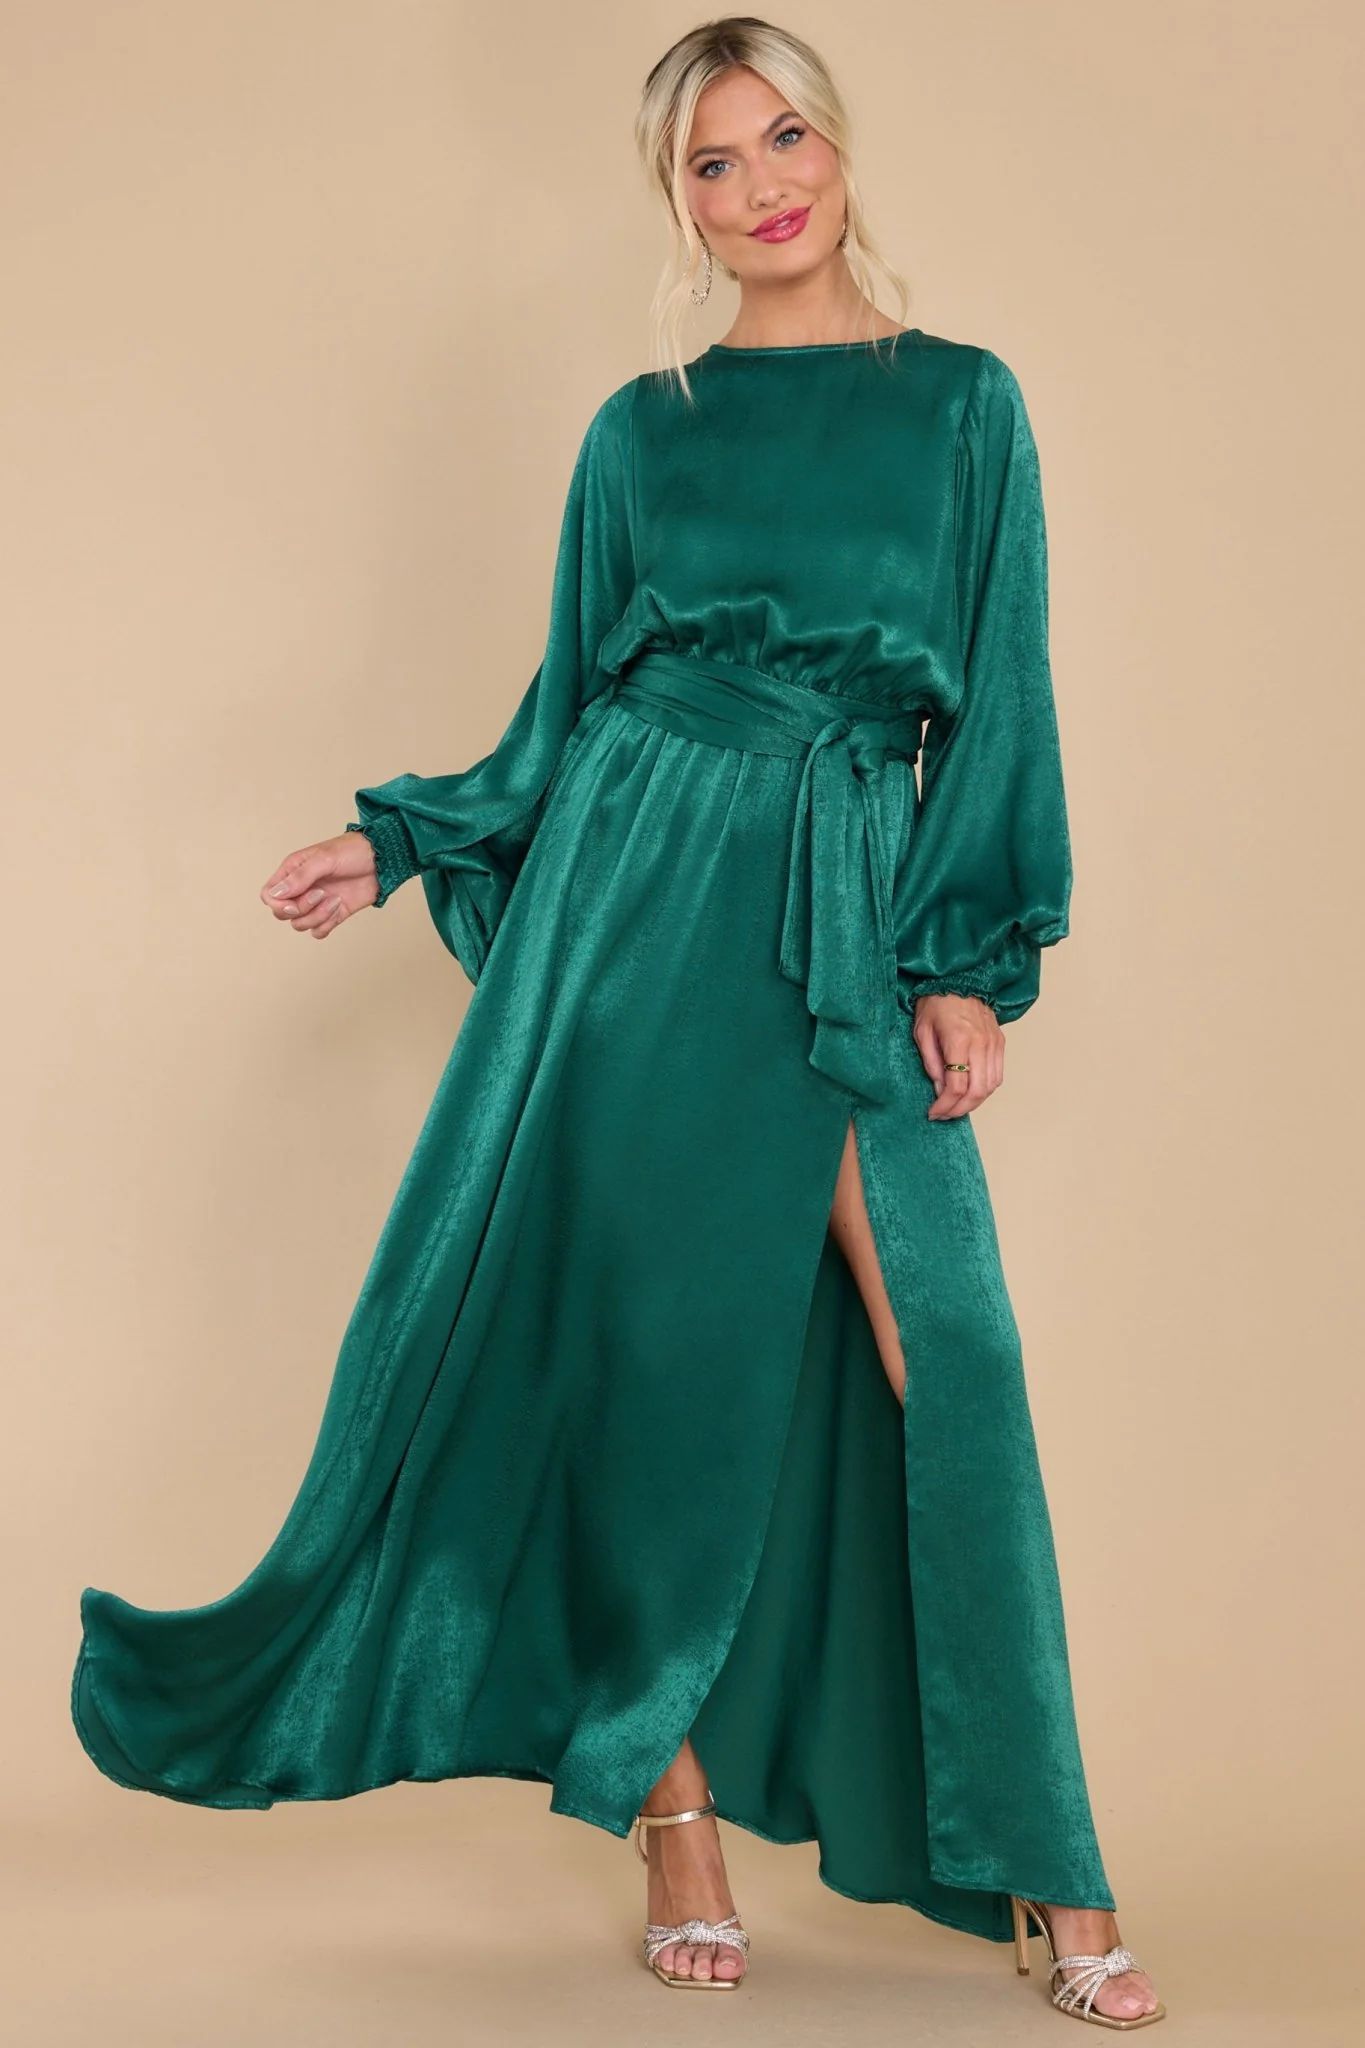 Like A Princess Emerald Maxi Dress | Red Dress 